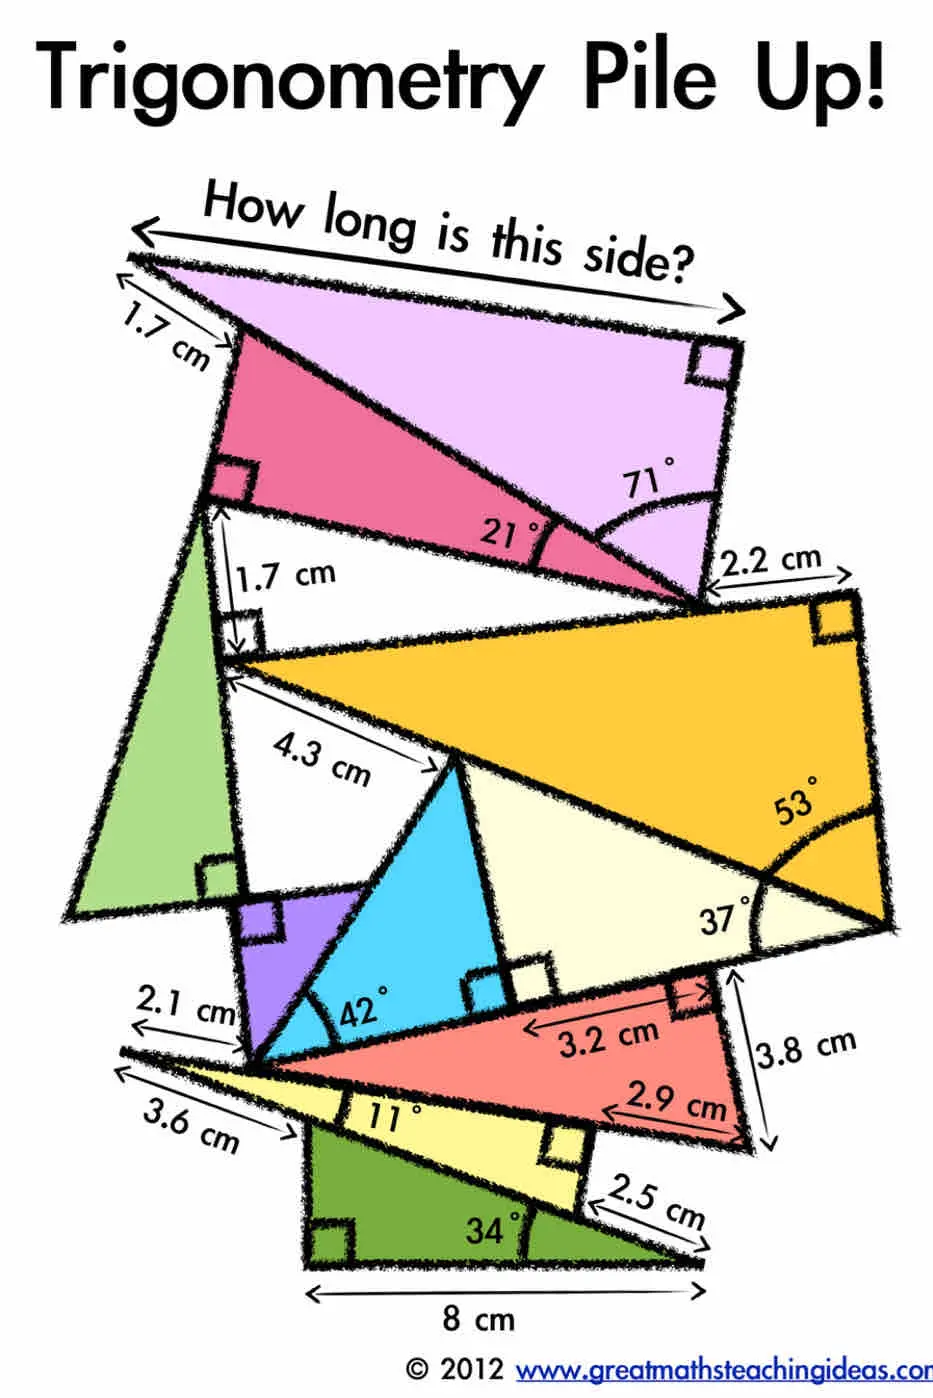 Trigonometry Pile Up! © 2012 www.greatmathsteachingideas.cor